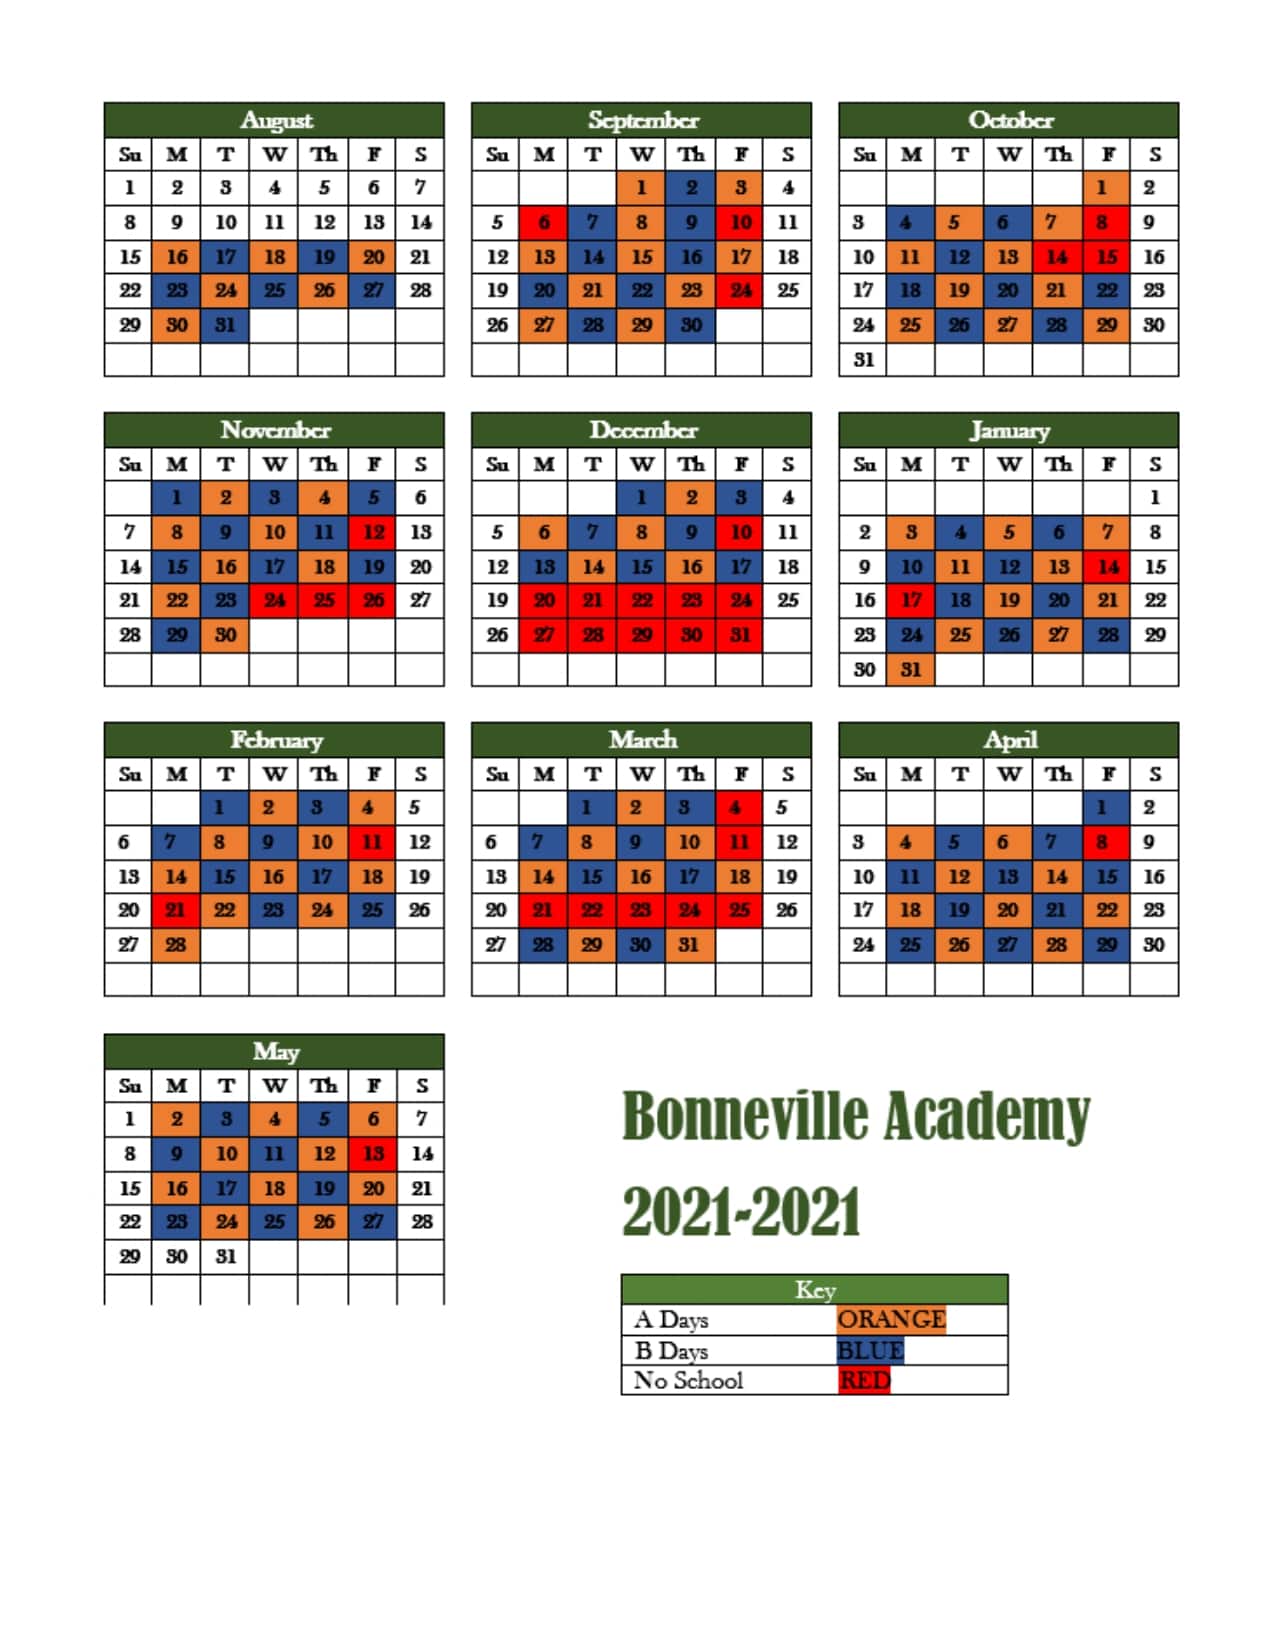 Calendar | Bonneville Academy in Stansbury Park, Utah